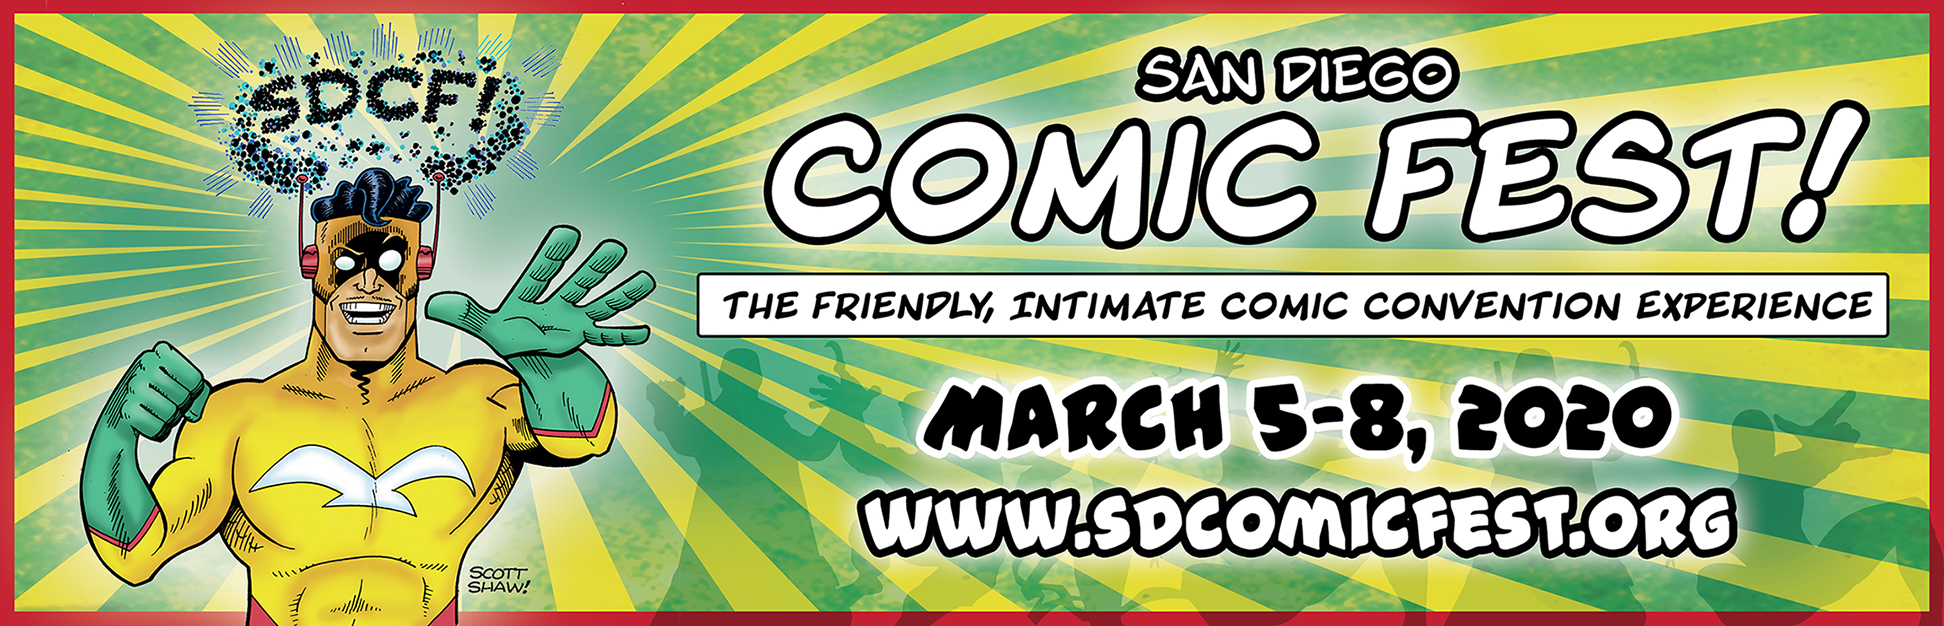 2020 San Diego Comic Fest